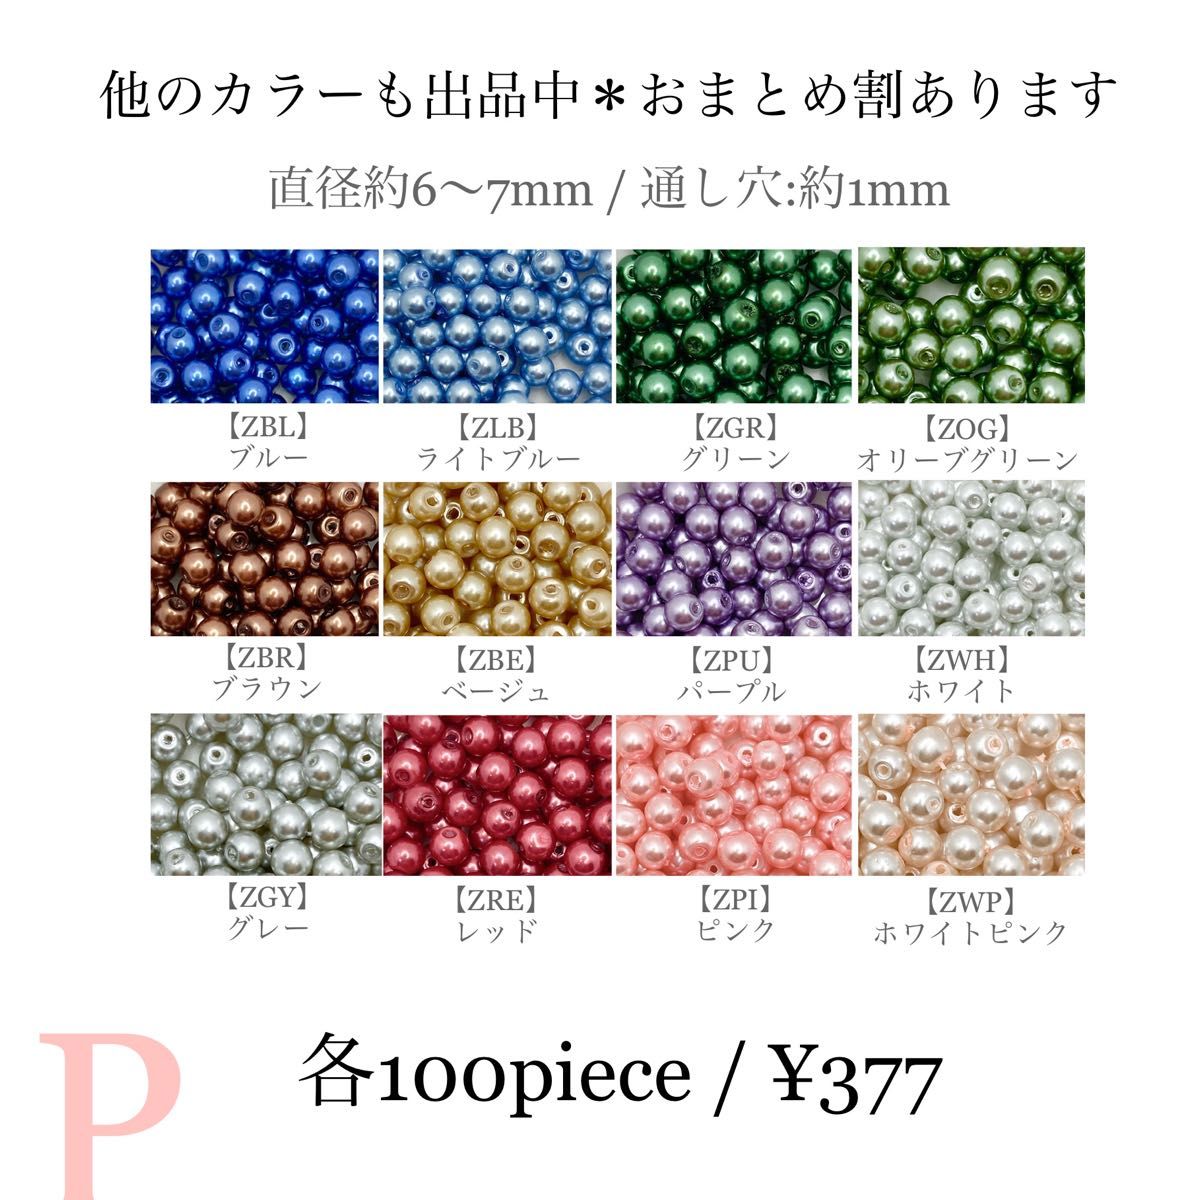 Z47【パールビーズ】ピンク 6mm 100個セット ガラスビーズ ハンドメイド 素材 材料 定番 ラウンド パーツ